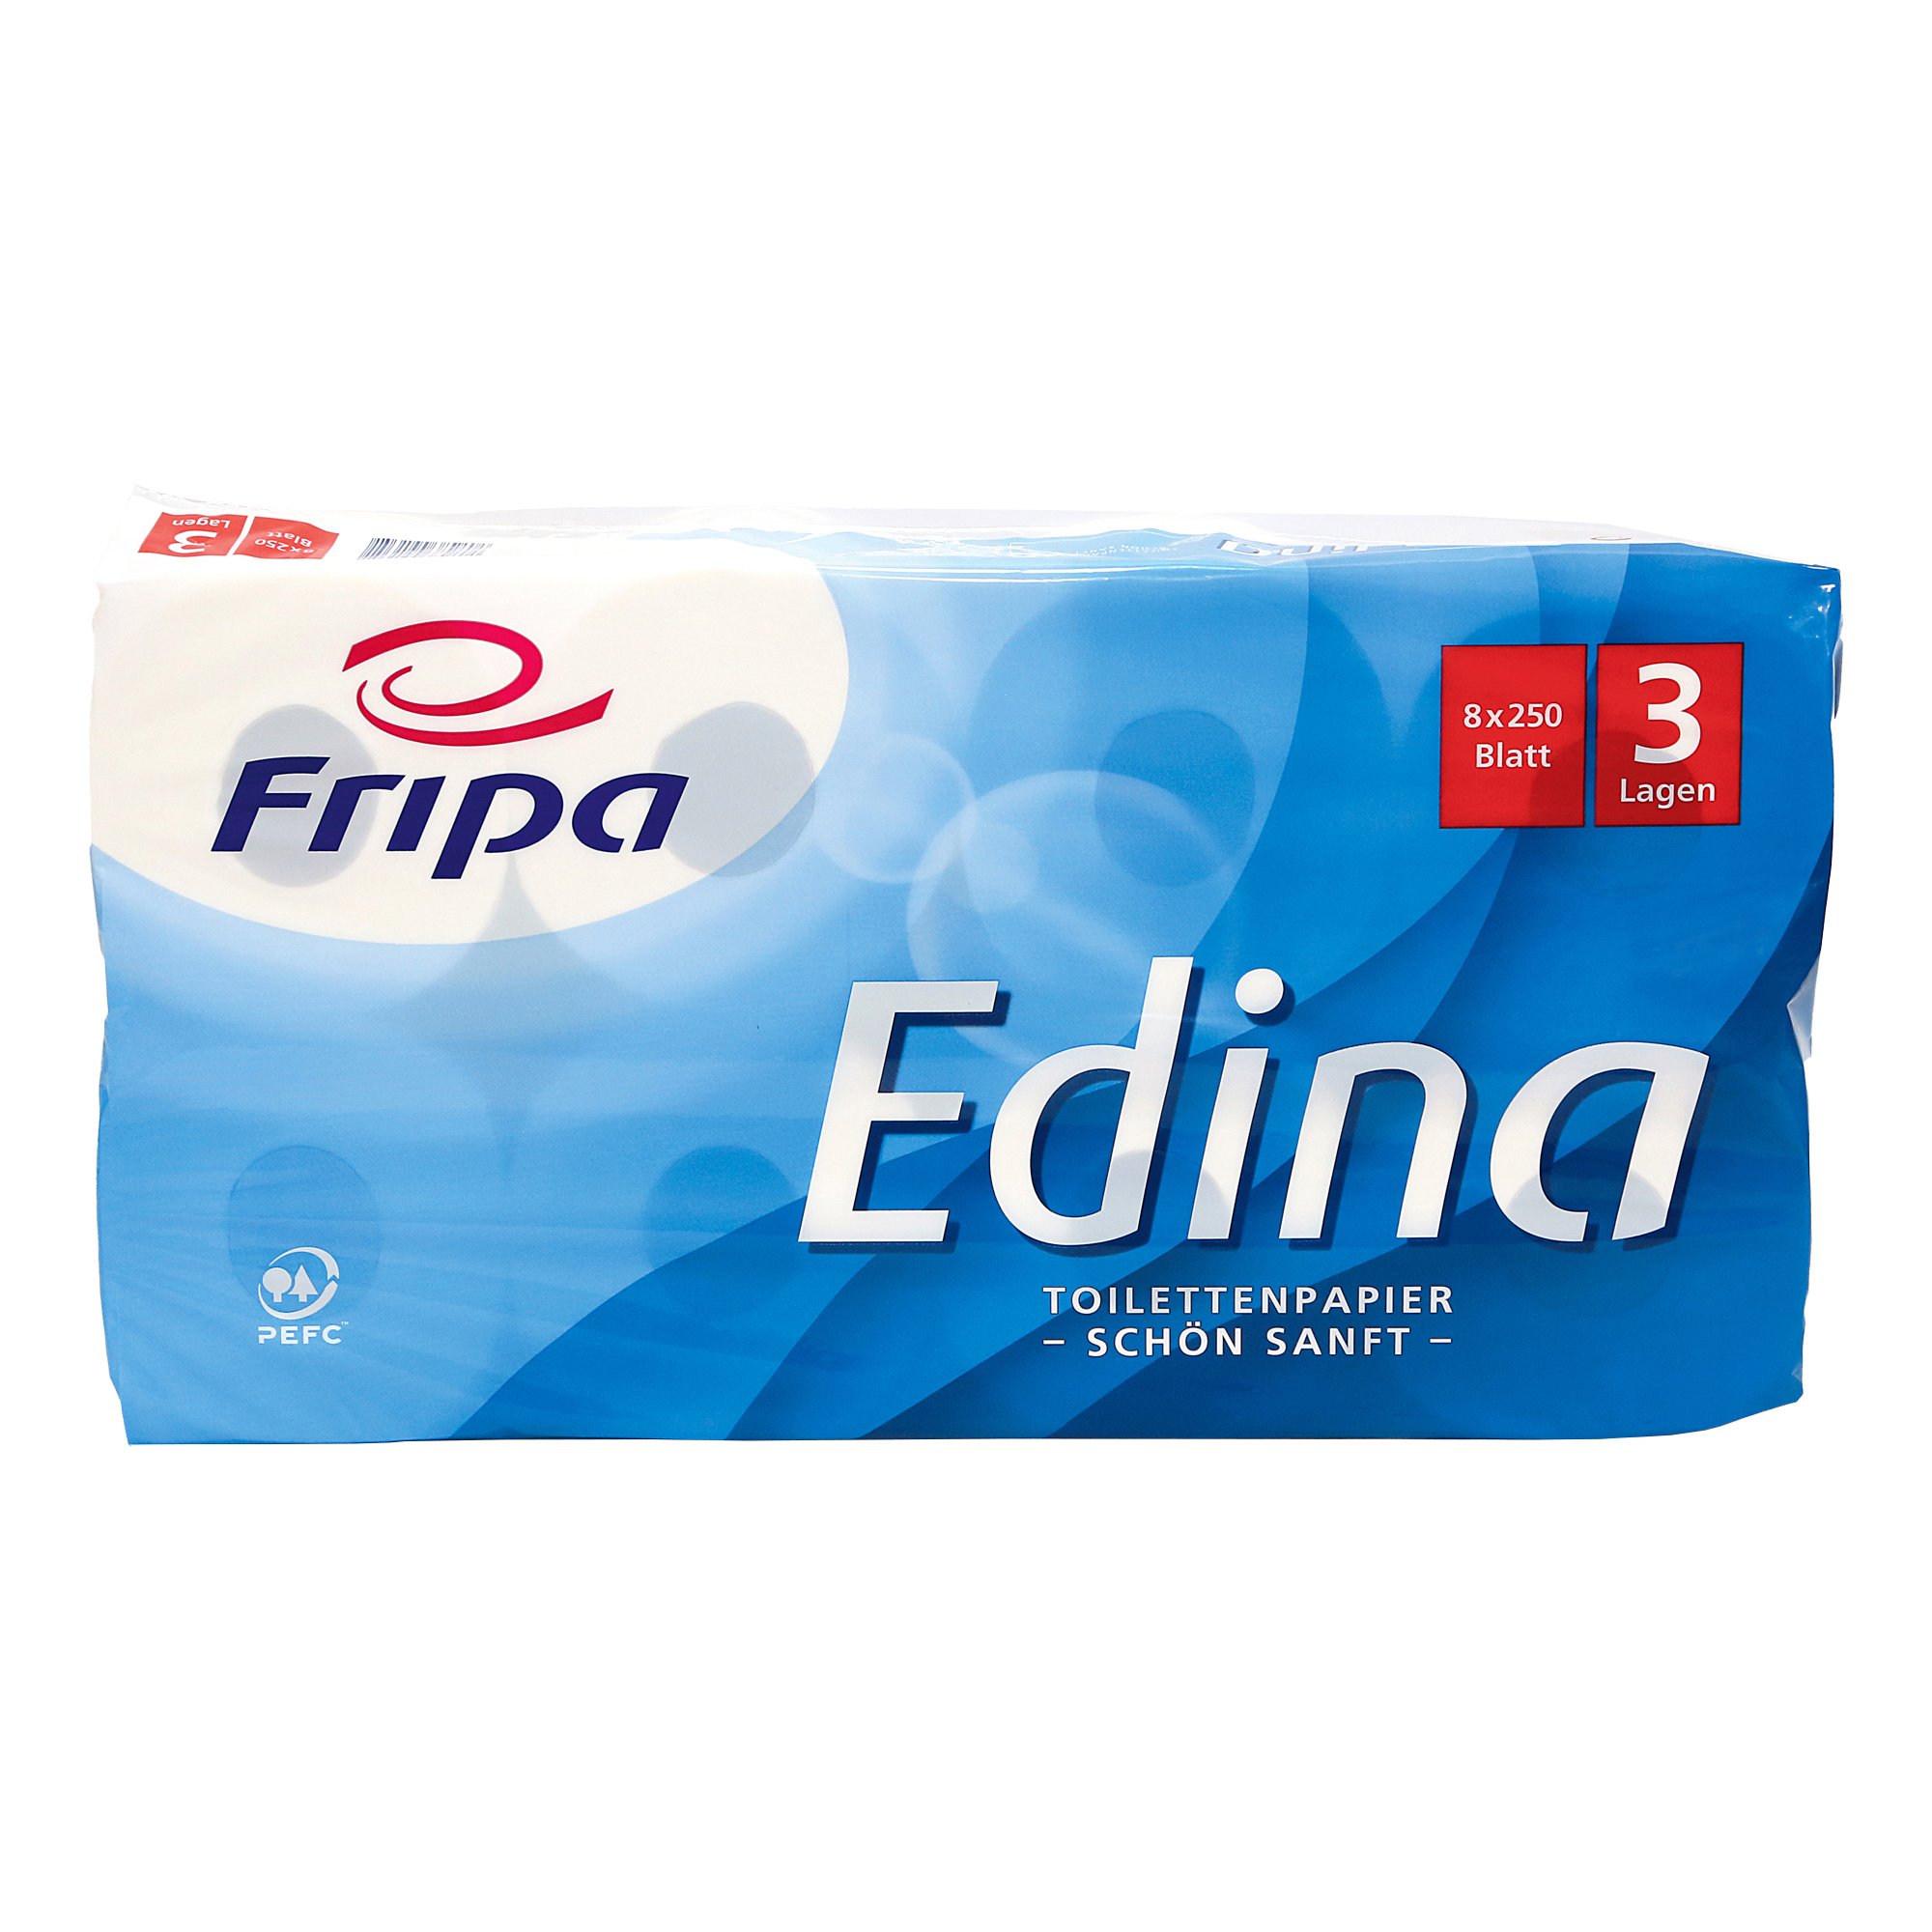 Fripa Edina Toilettenpapier 3-lagig 250 Blatt 72 Rollen 1010810_1